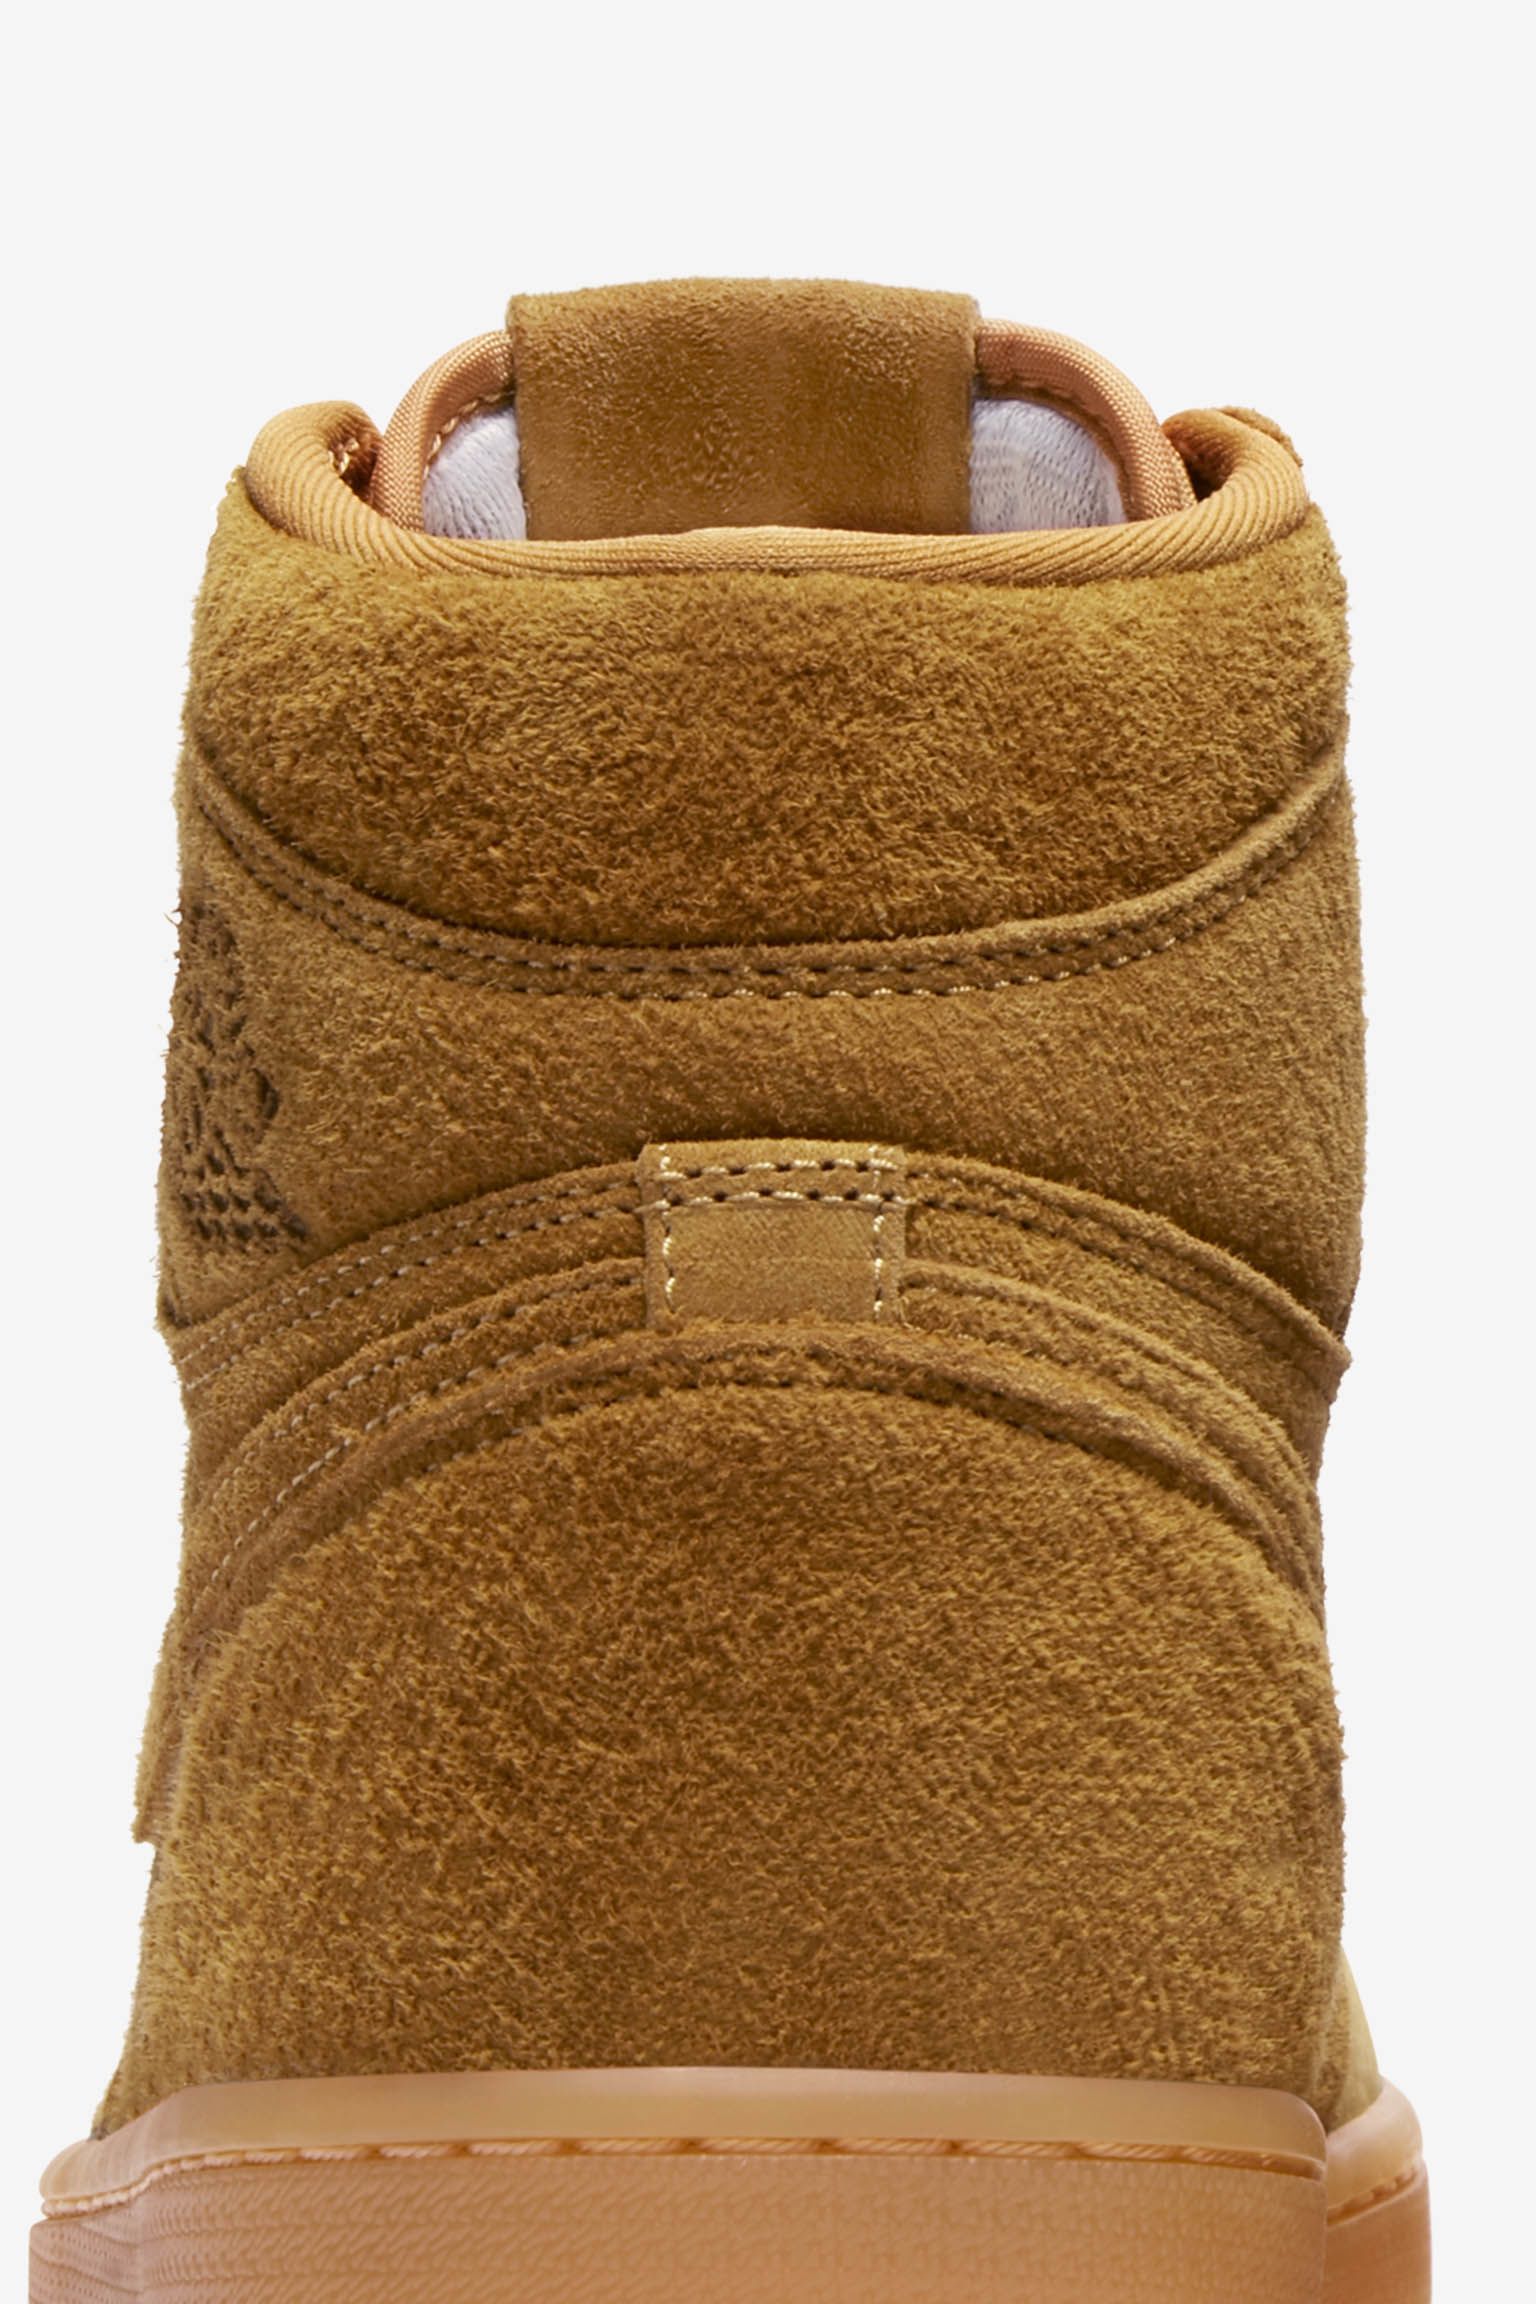 Air Jordan 1 High 'Wheat' Release Date. Nike SNKRS